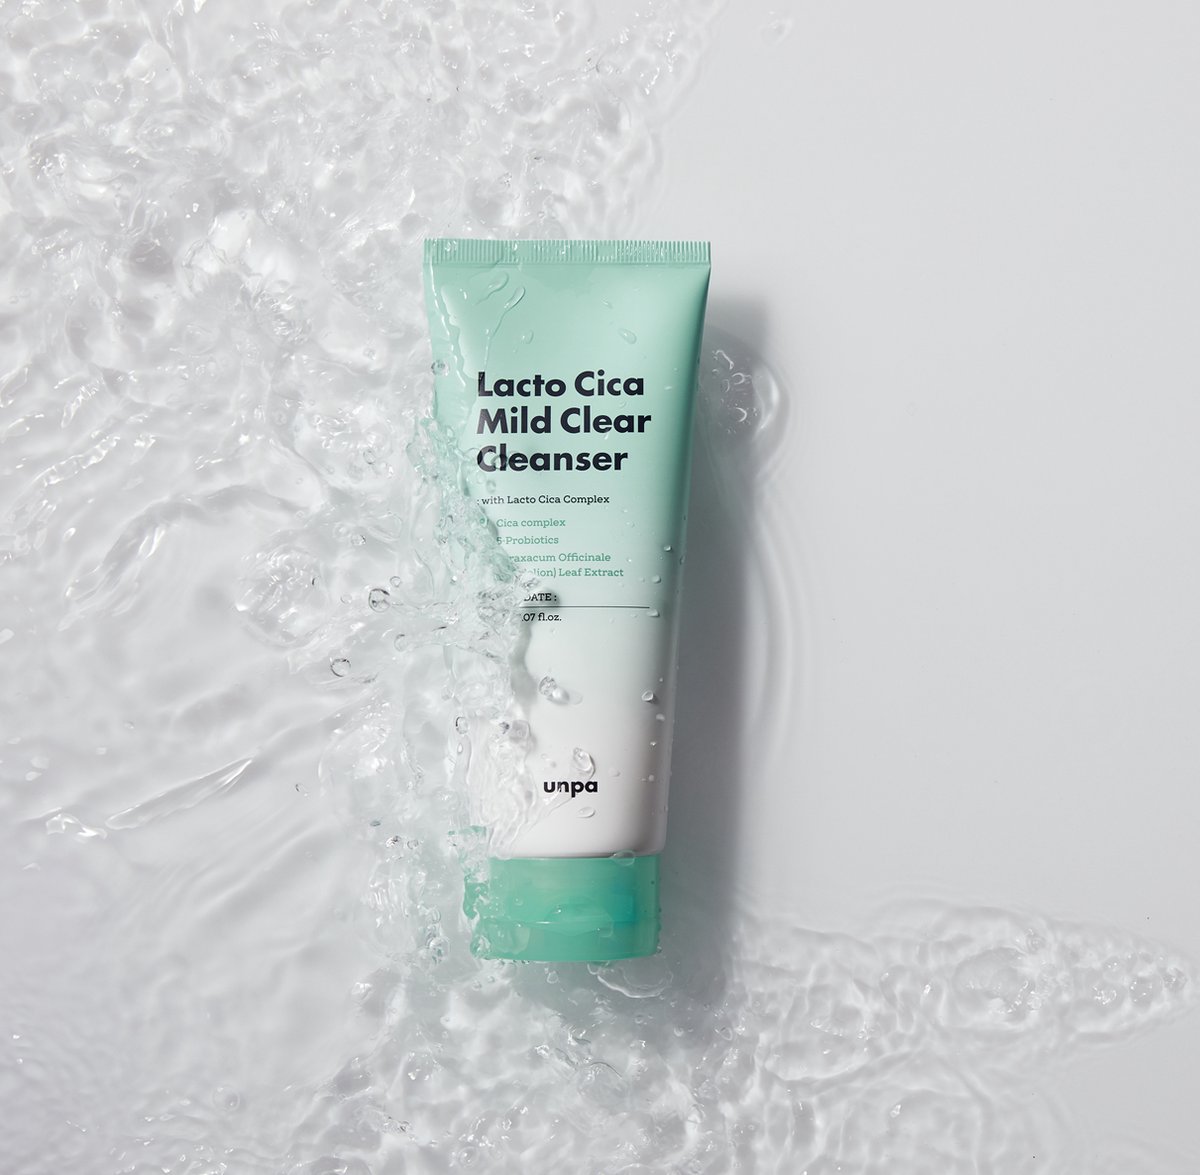 Unpa - Lacto Cica Mild Clear Cleanser 150ml - Gezichtsreiniger - Vochtinbrengende Reinigingsschuim - Moisturizing Cleansing Foam - Vette Huid - Zachte hypoallergene gezichts en huidreiniging voor de gevoelige huid